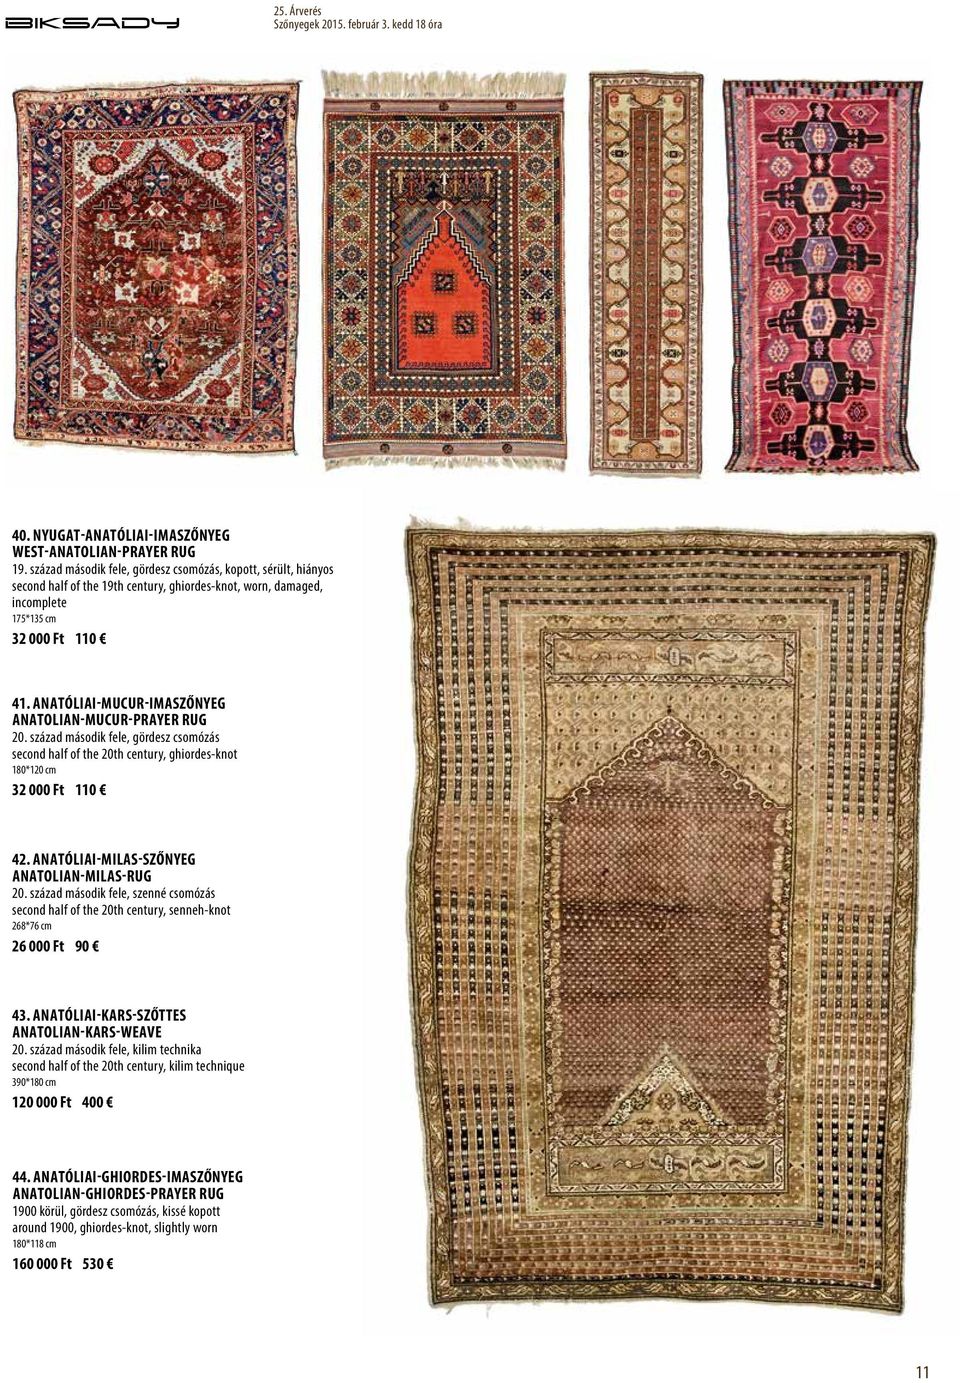 Anatóliai-Mucur-imaszőnyeg Anatolian-Mucur-prayer rug 20. század második fele, gördesz csomózás second half of the 20th century, ghiordes-knot 180*120 cm 32 000 Ft 110 42.